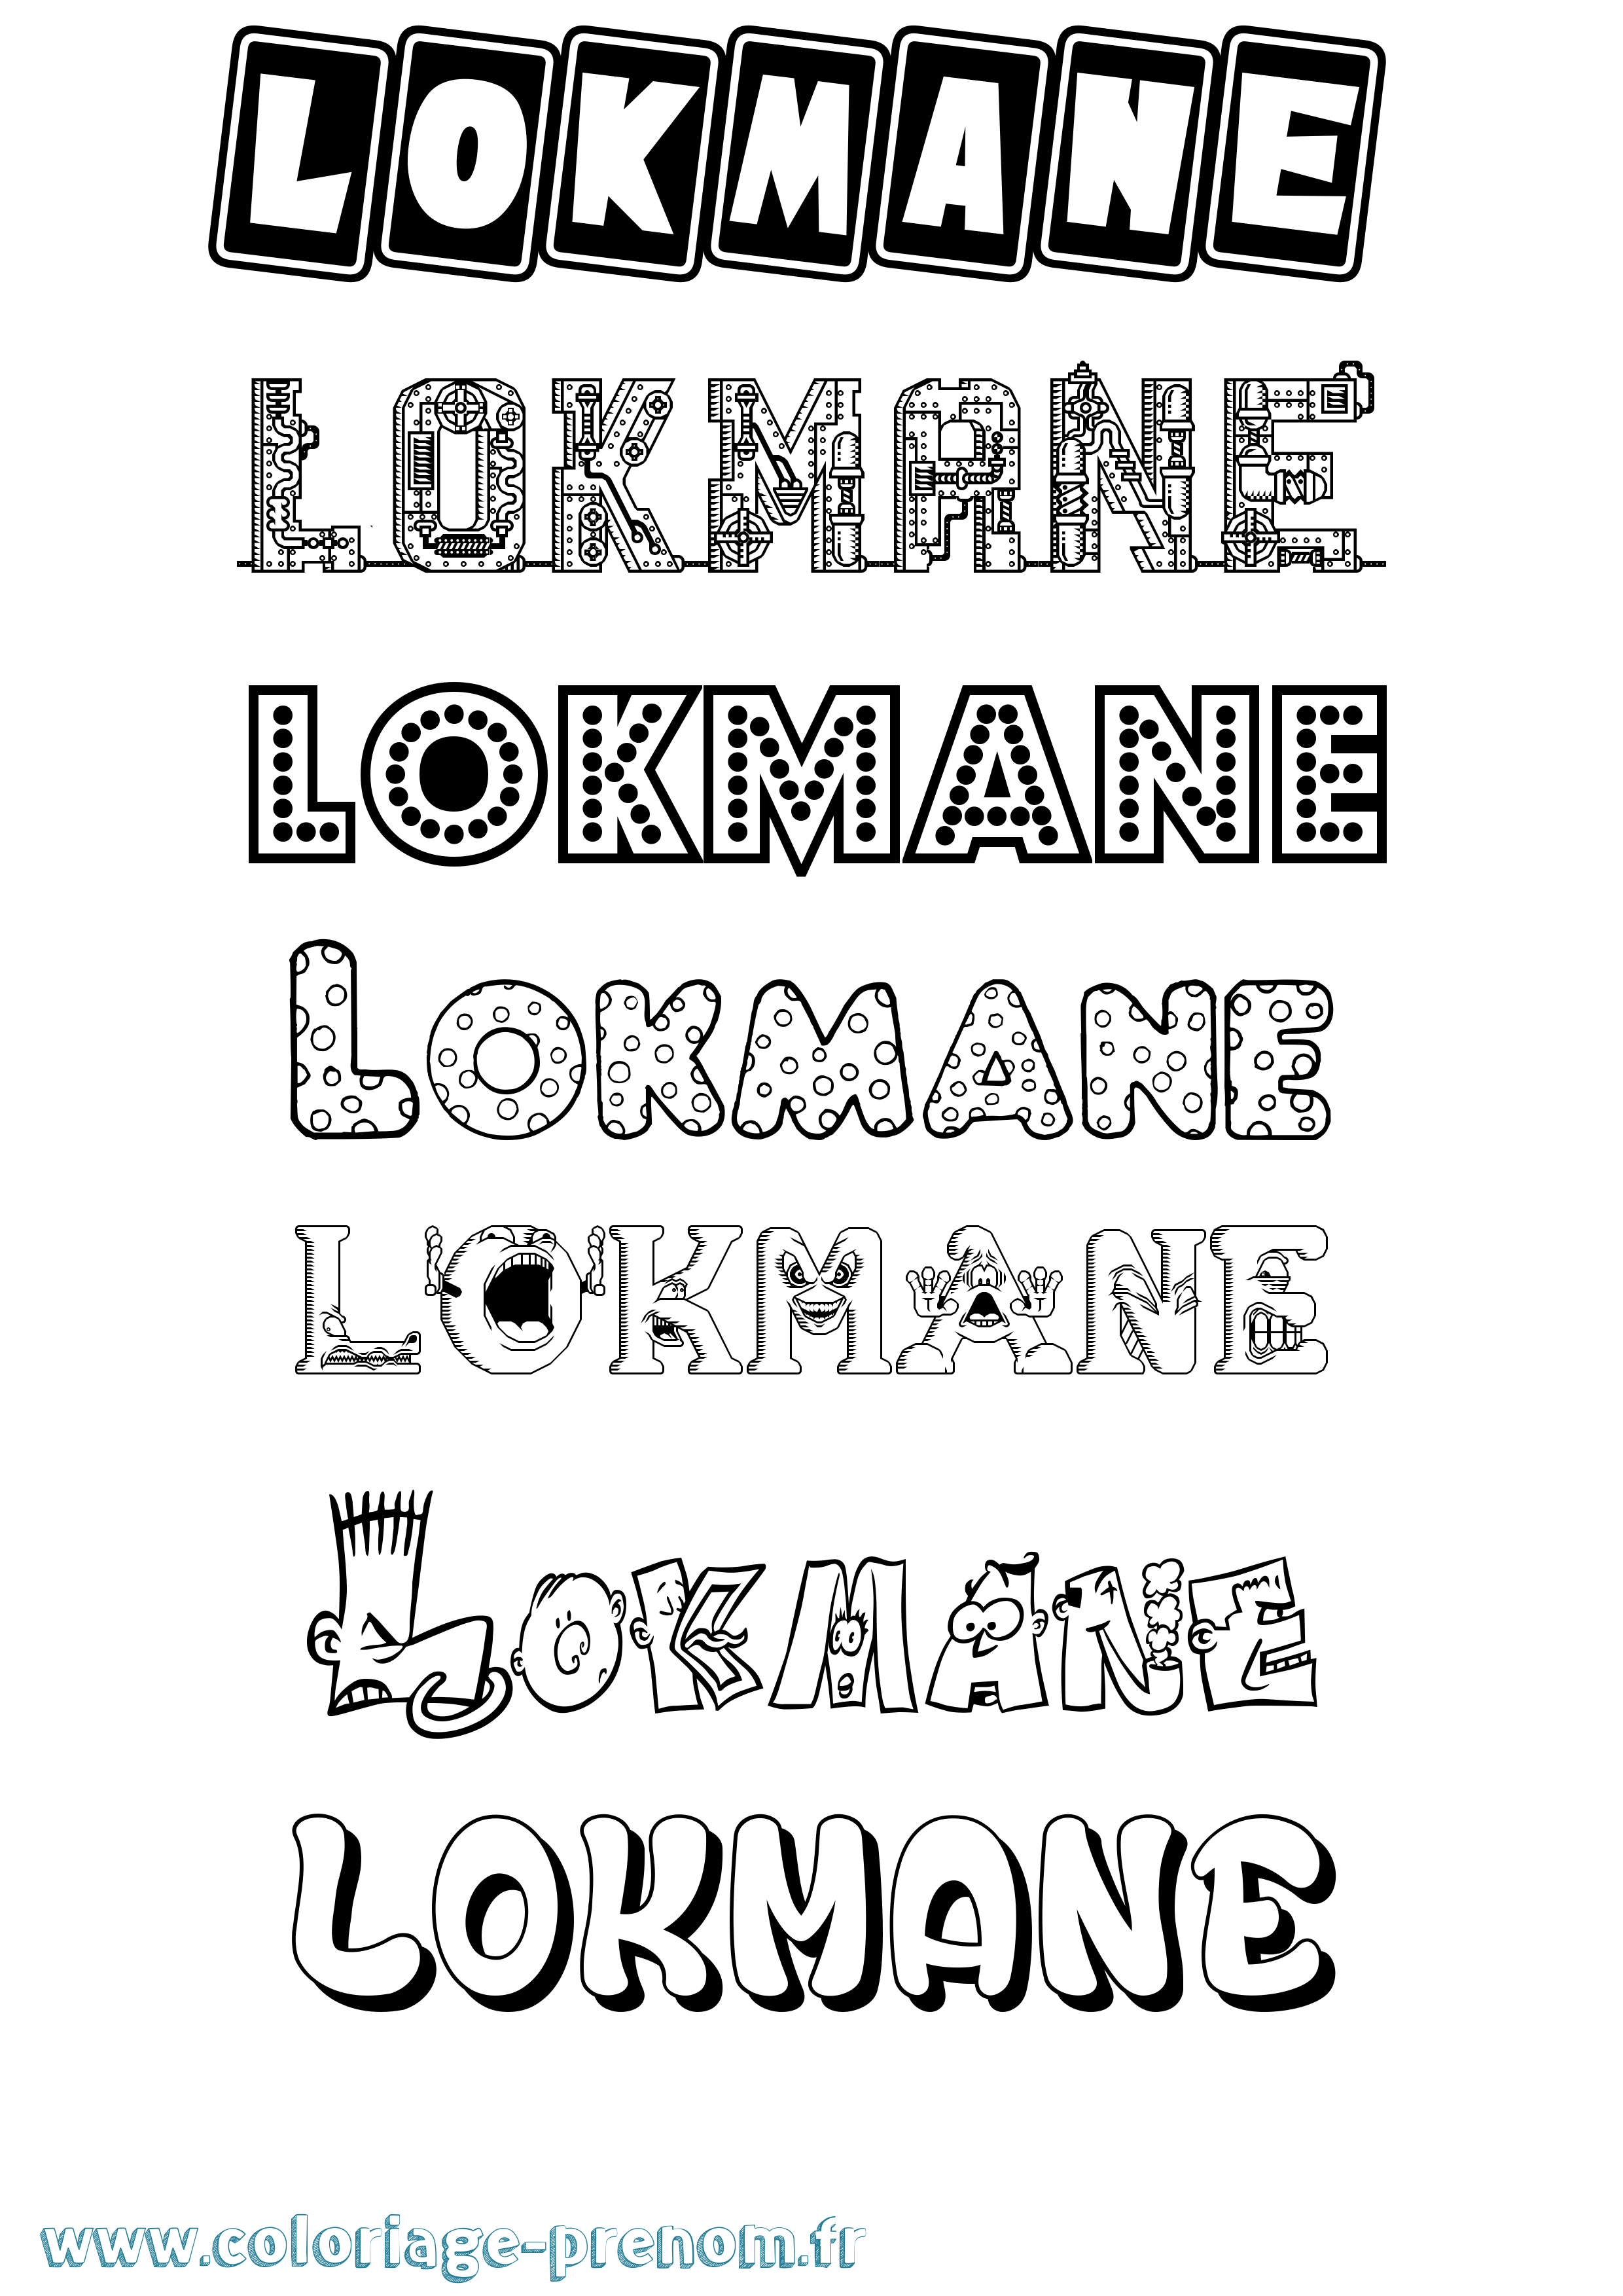 Coloriage prénom Lokmane Fun